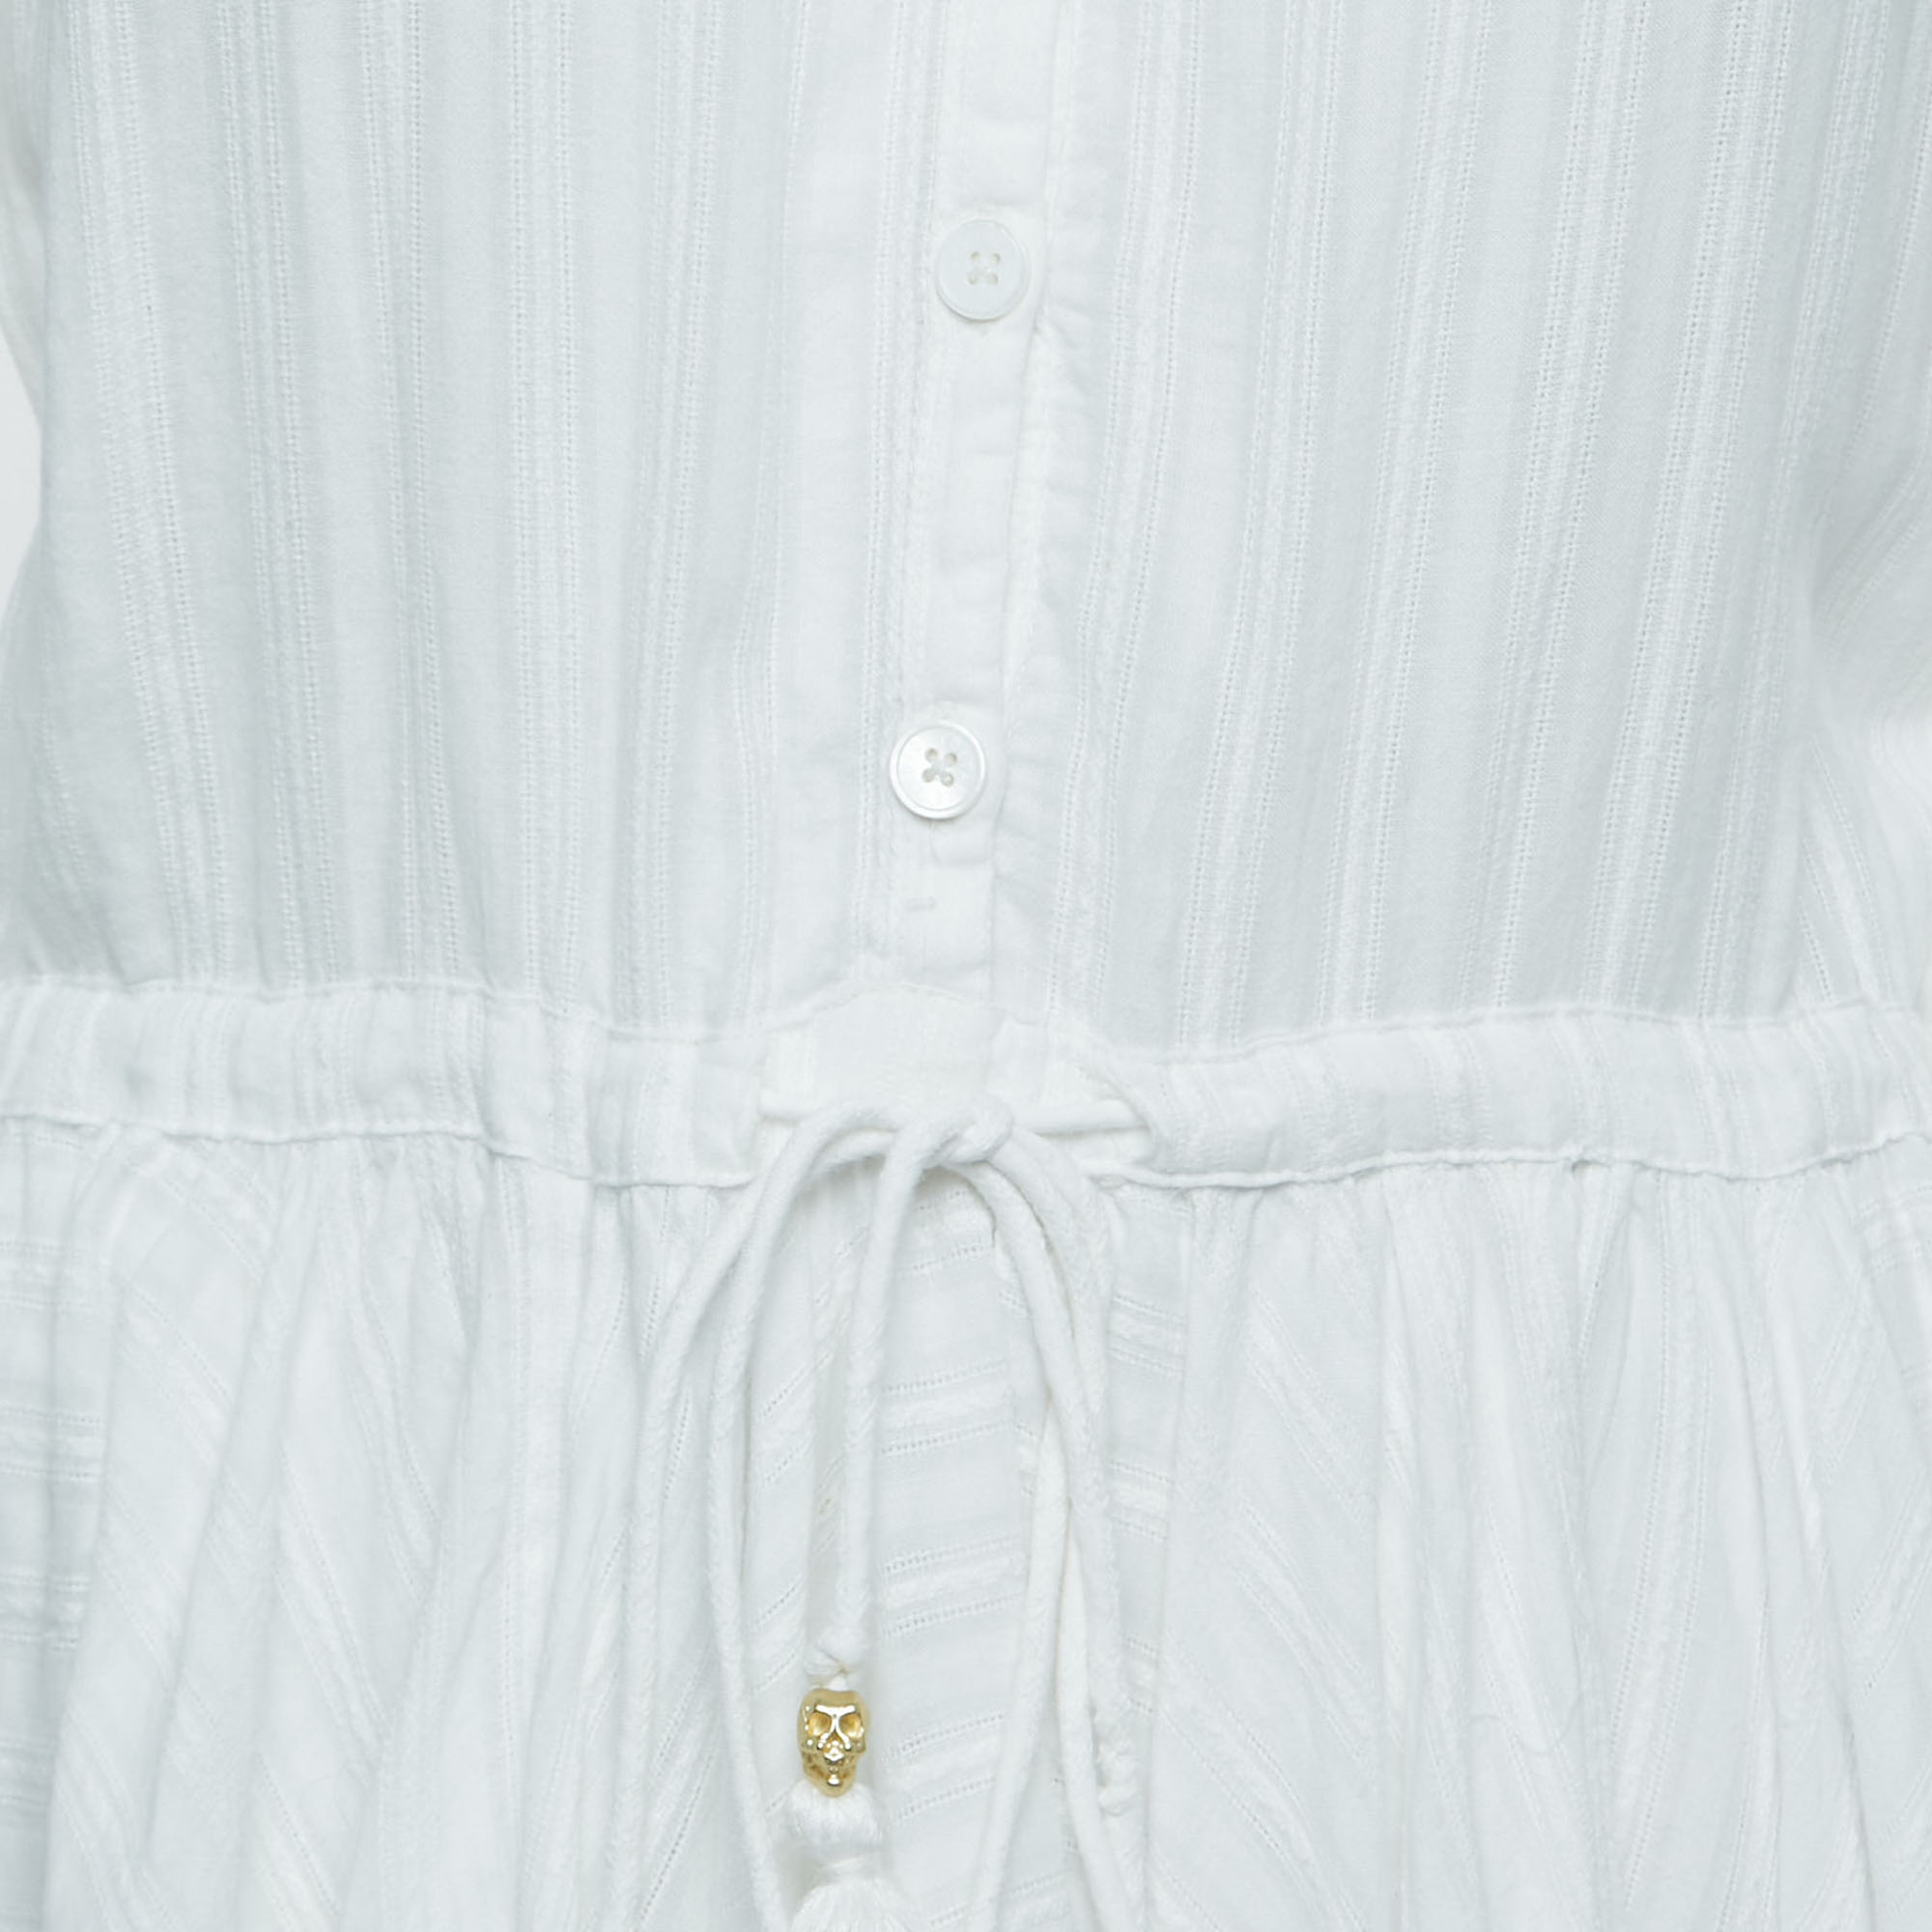 Zadig & Voltaire White Cotton Shirt Dress S